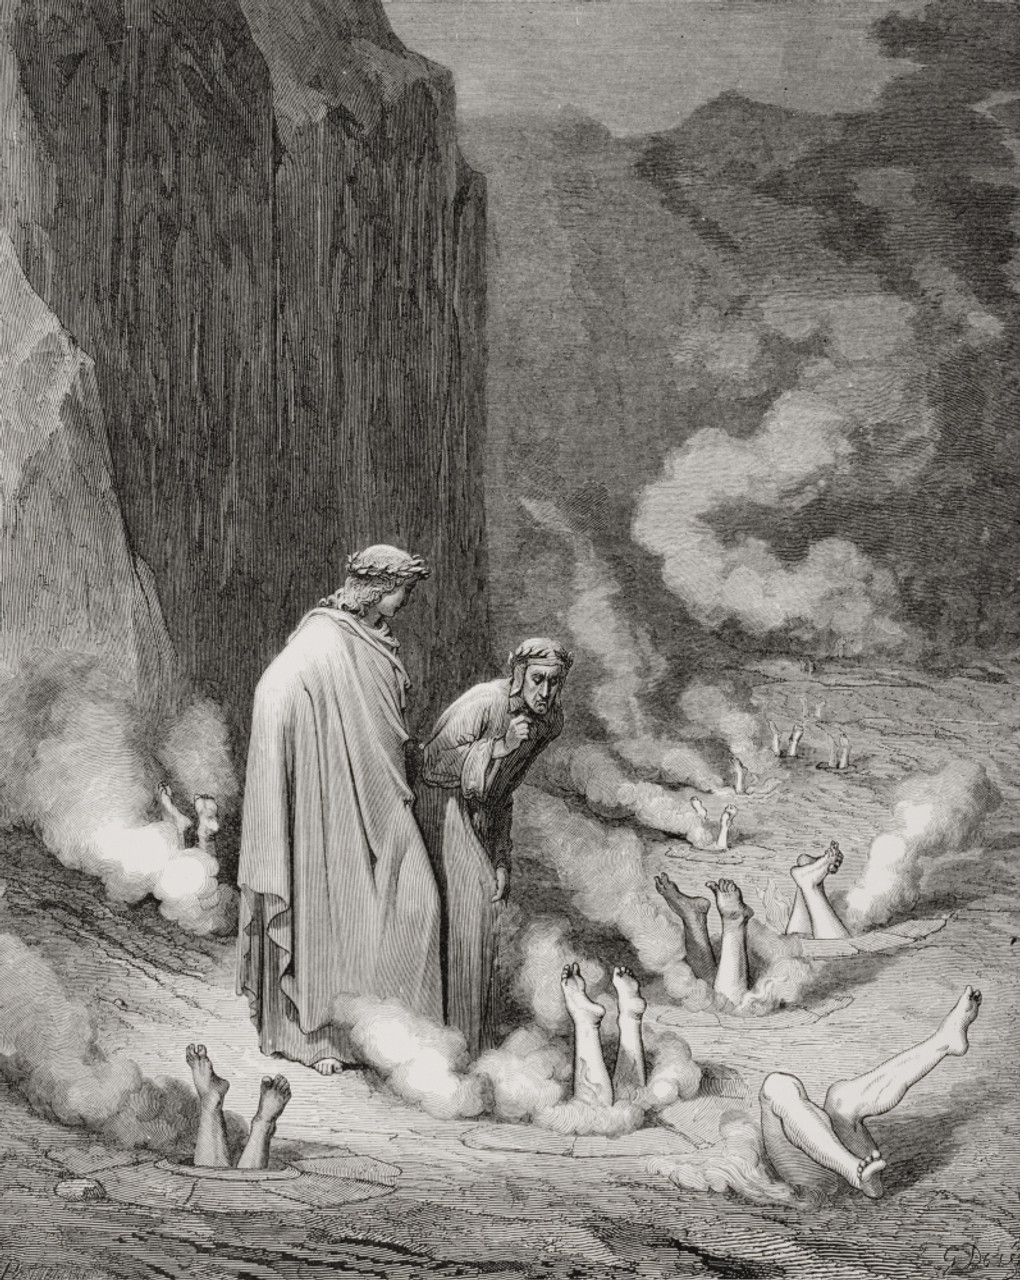 Dantes Inferno Dante Alighieri 1885 Illustrated -  in 2023